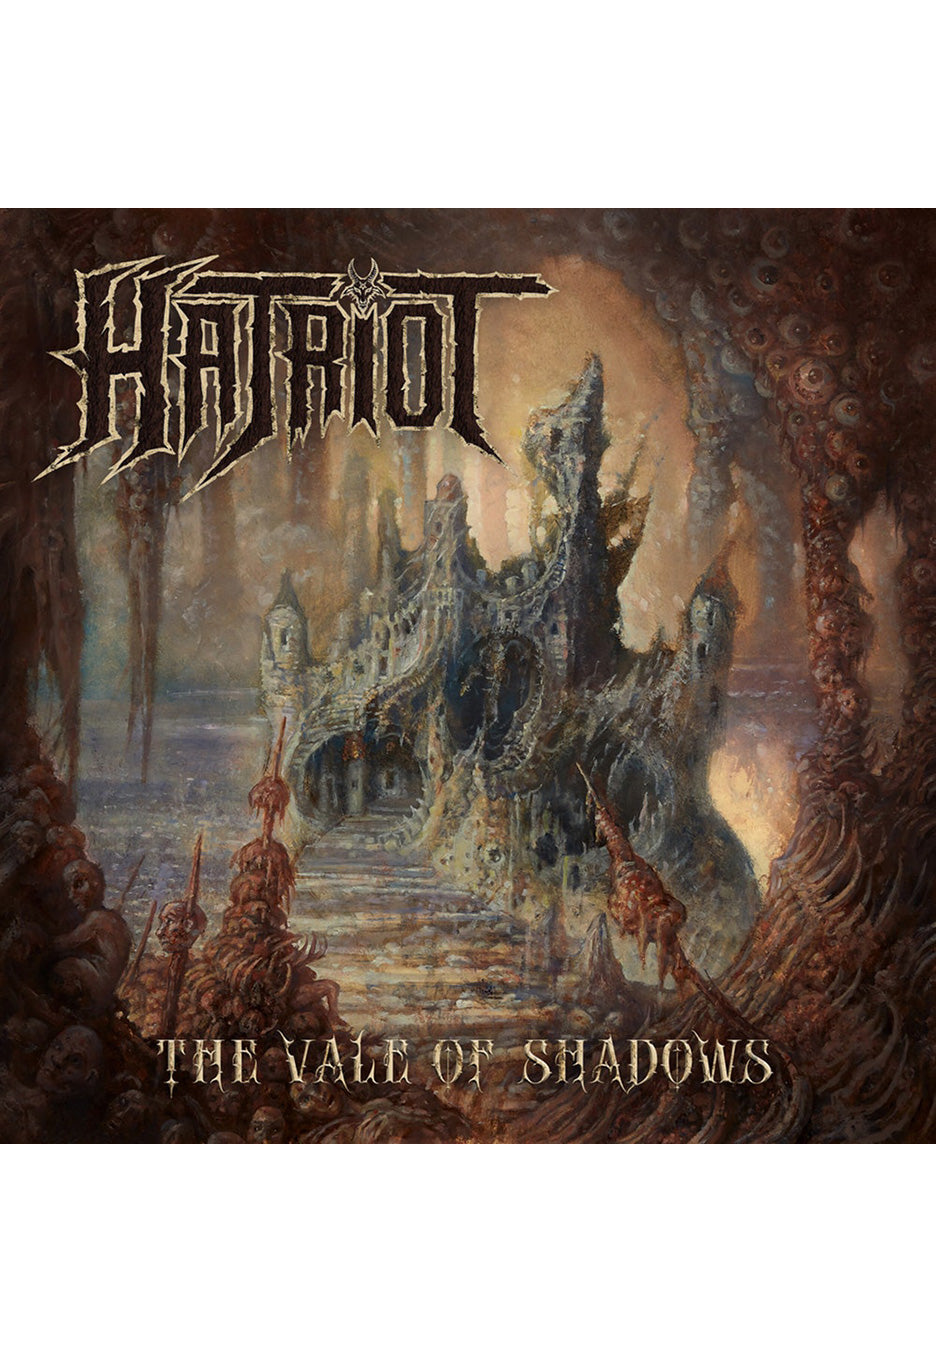 Hatriot - The Vale Of Shadows - Vinyl